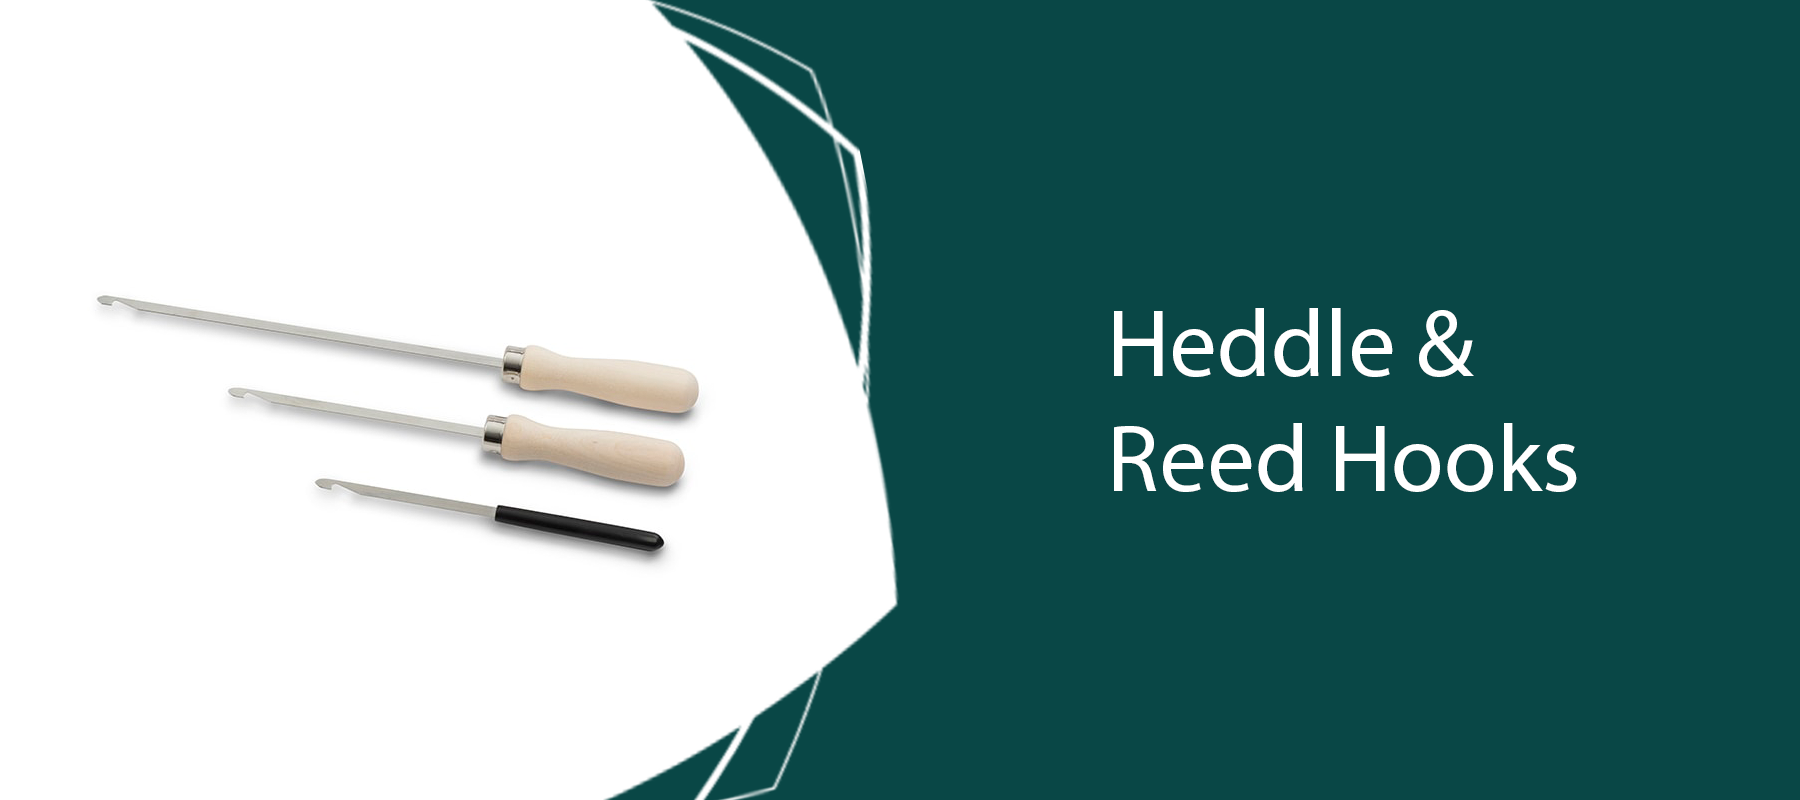 Heddle & Reed Hooks